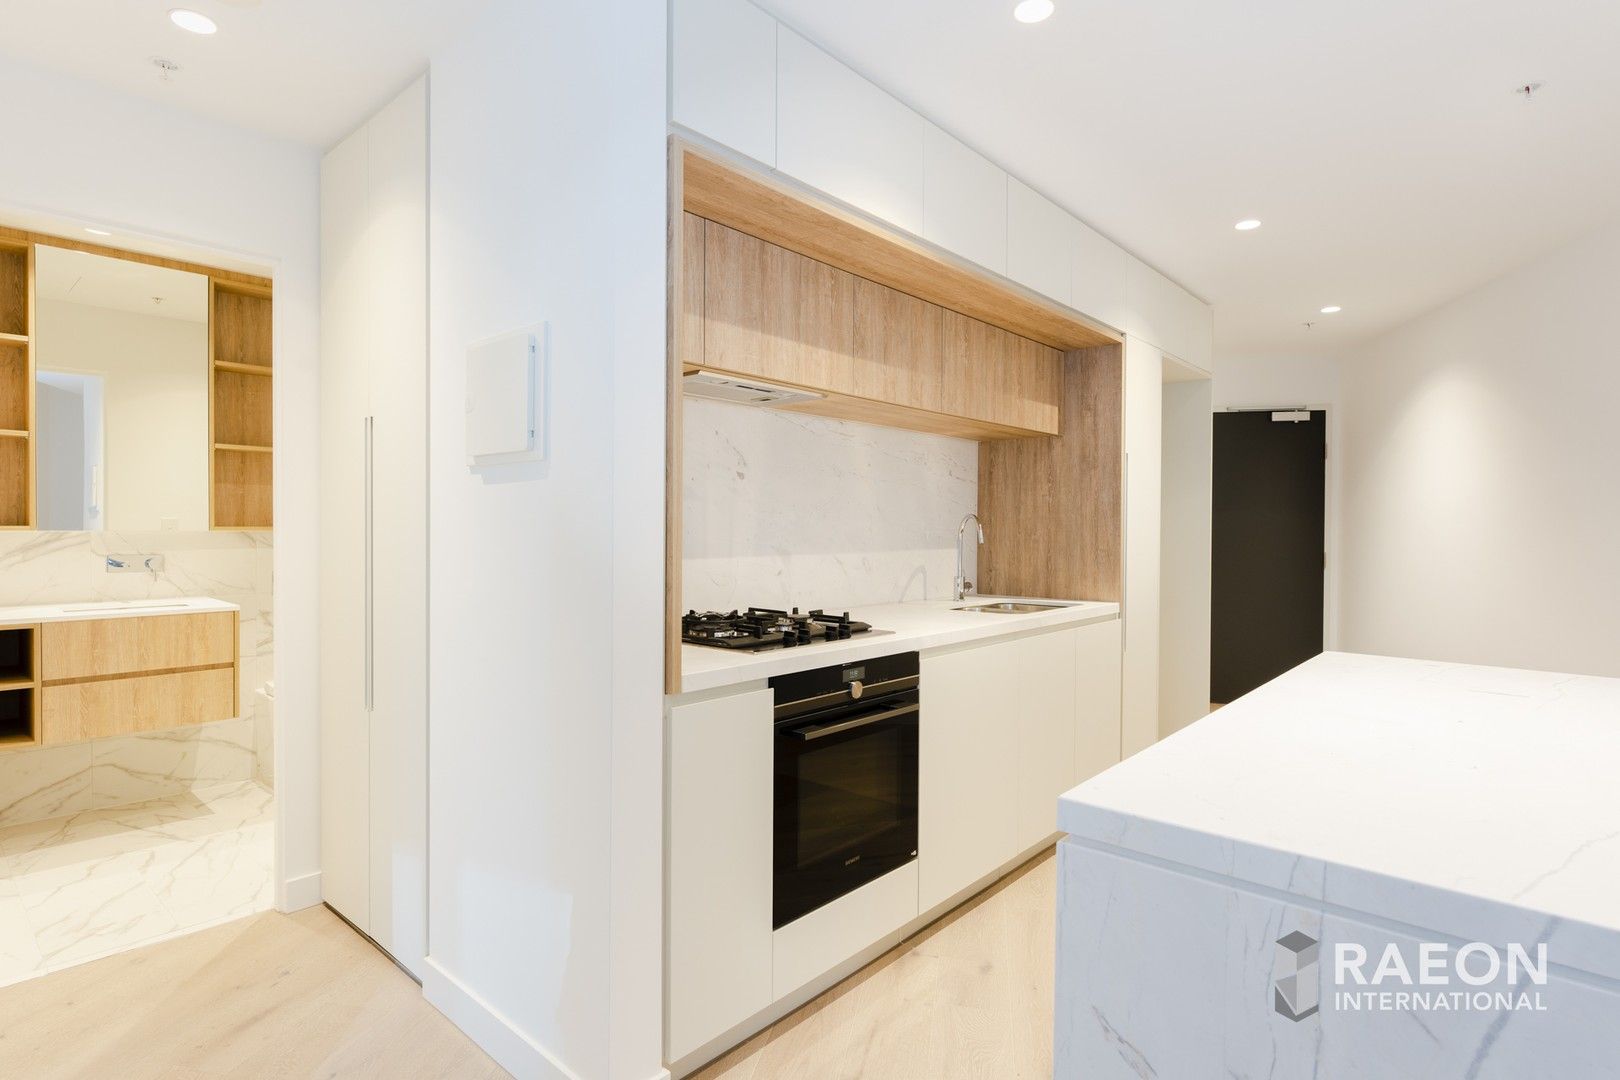 2 bedrooms Apartment / Unit / Flat in 2210C/633 Little Lonsdale Street MELBOURNE VIC, 3000